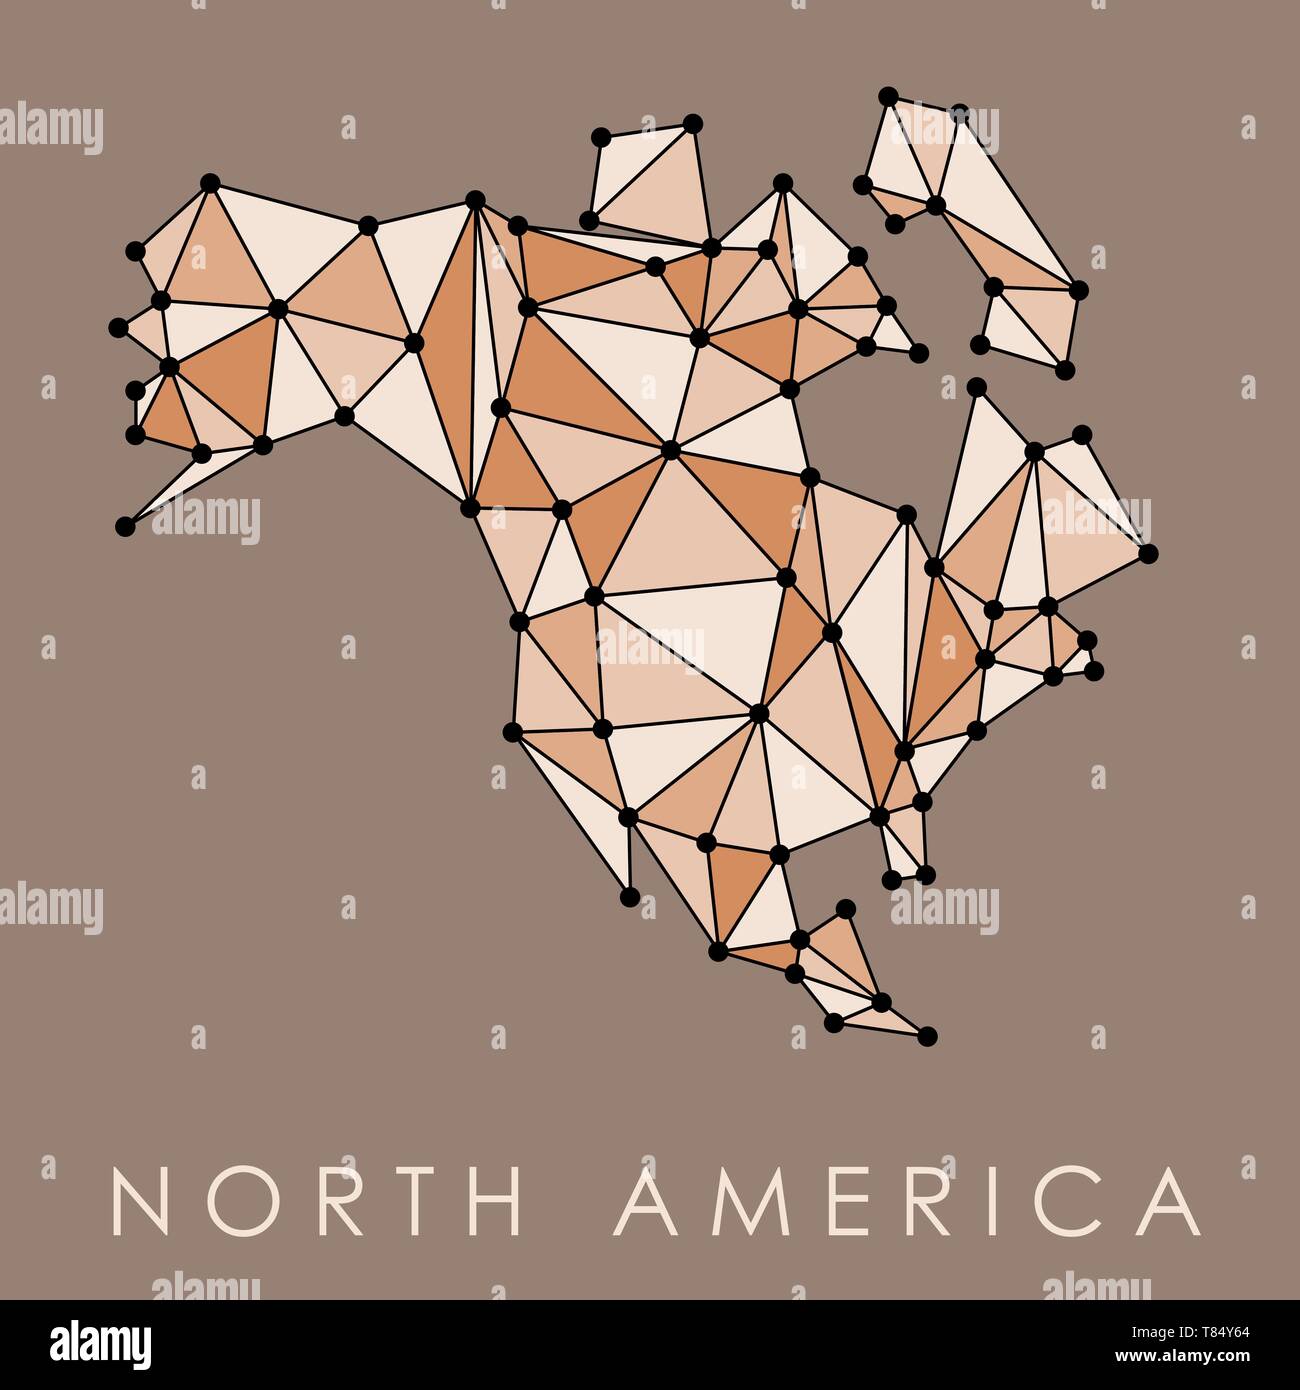 North America map vector - low polygon geometric style illustration. Stock Vector